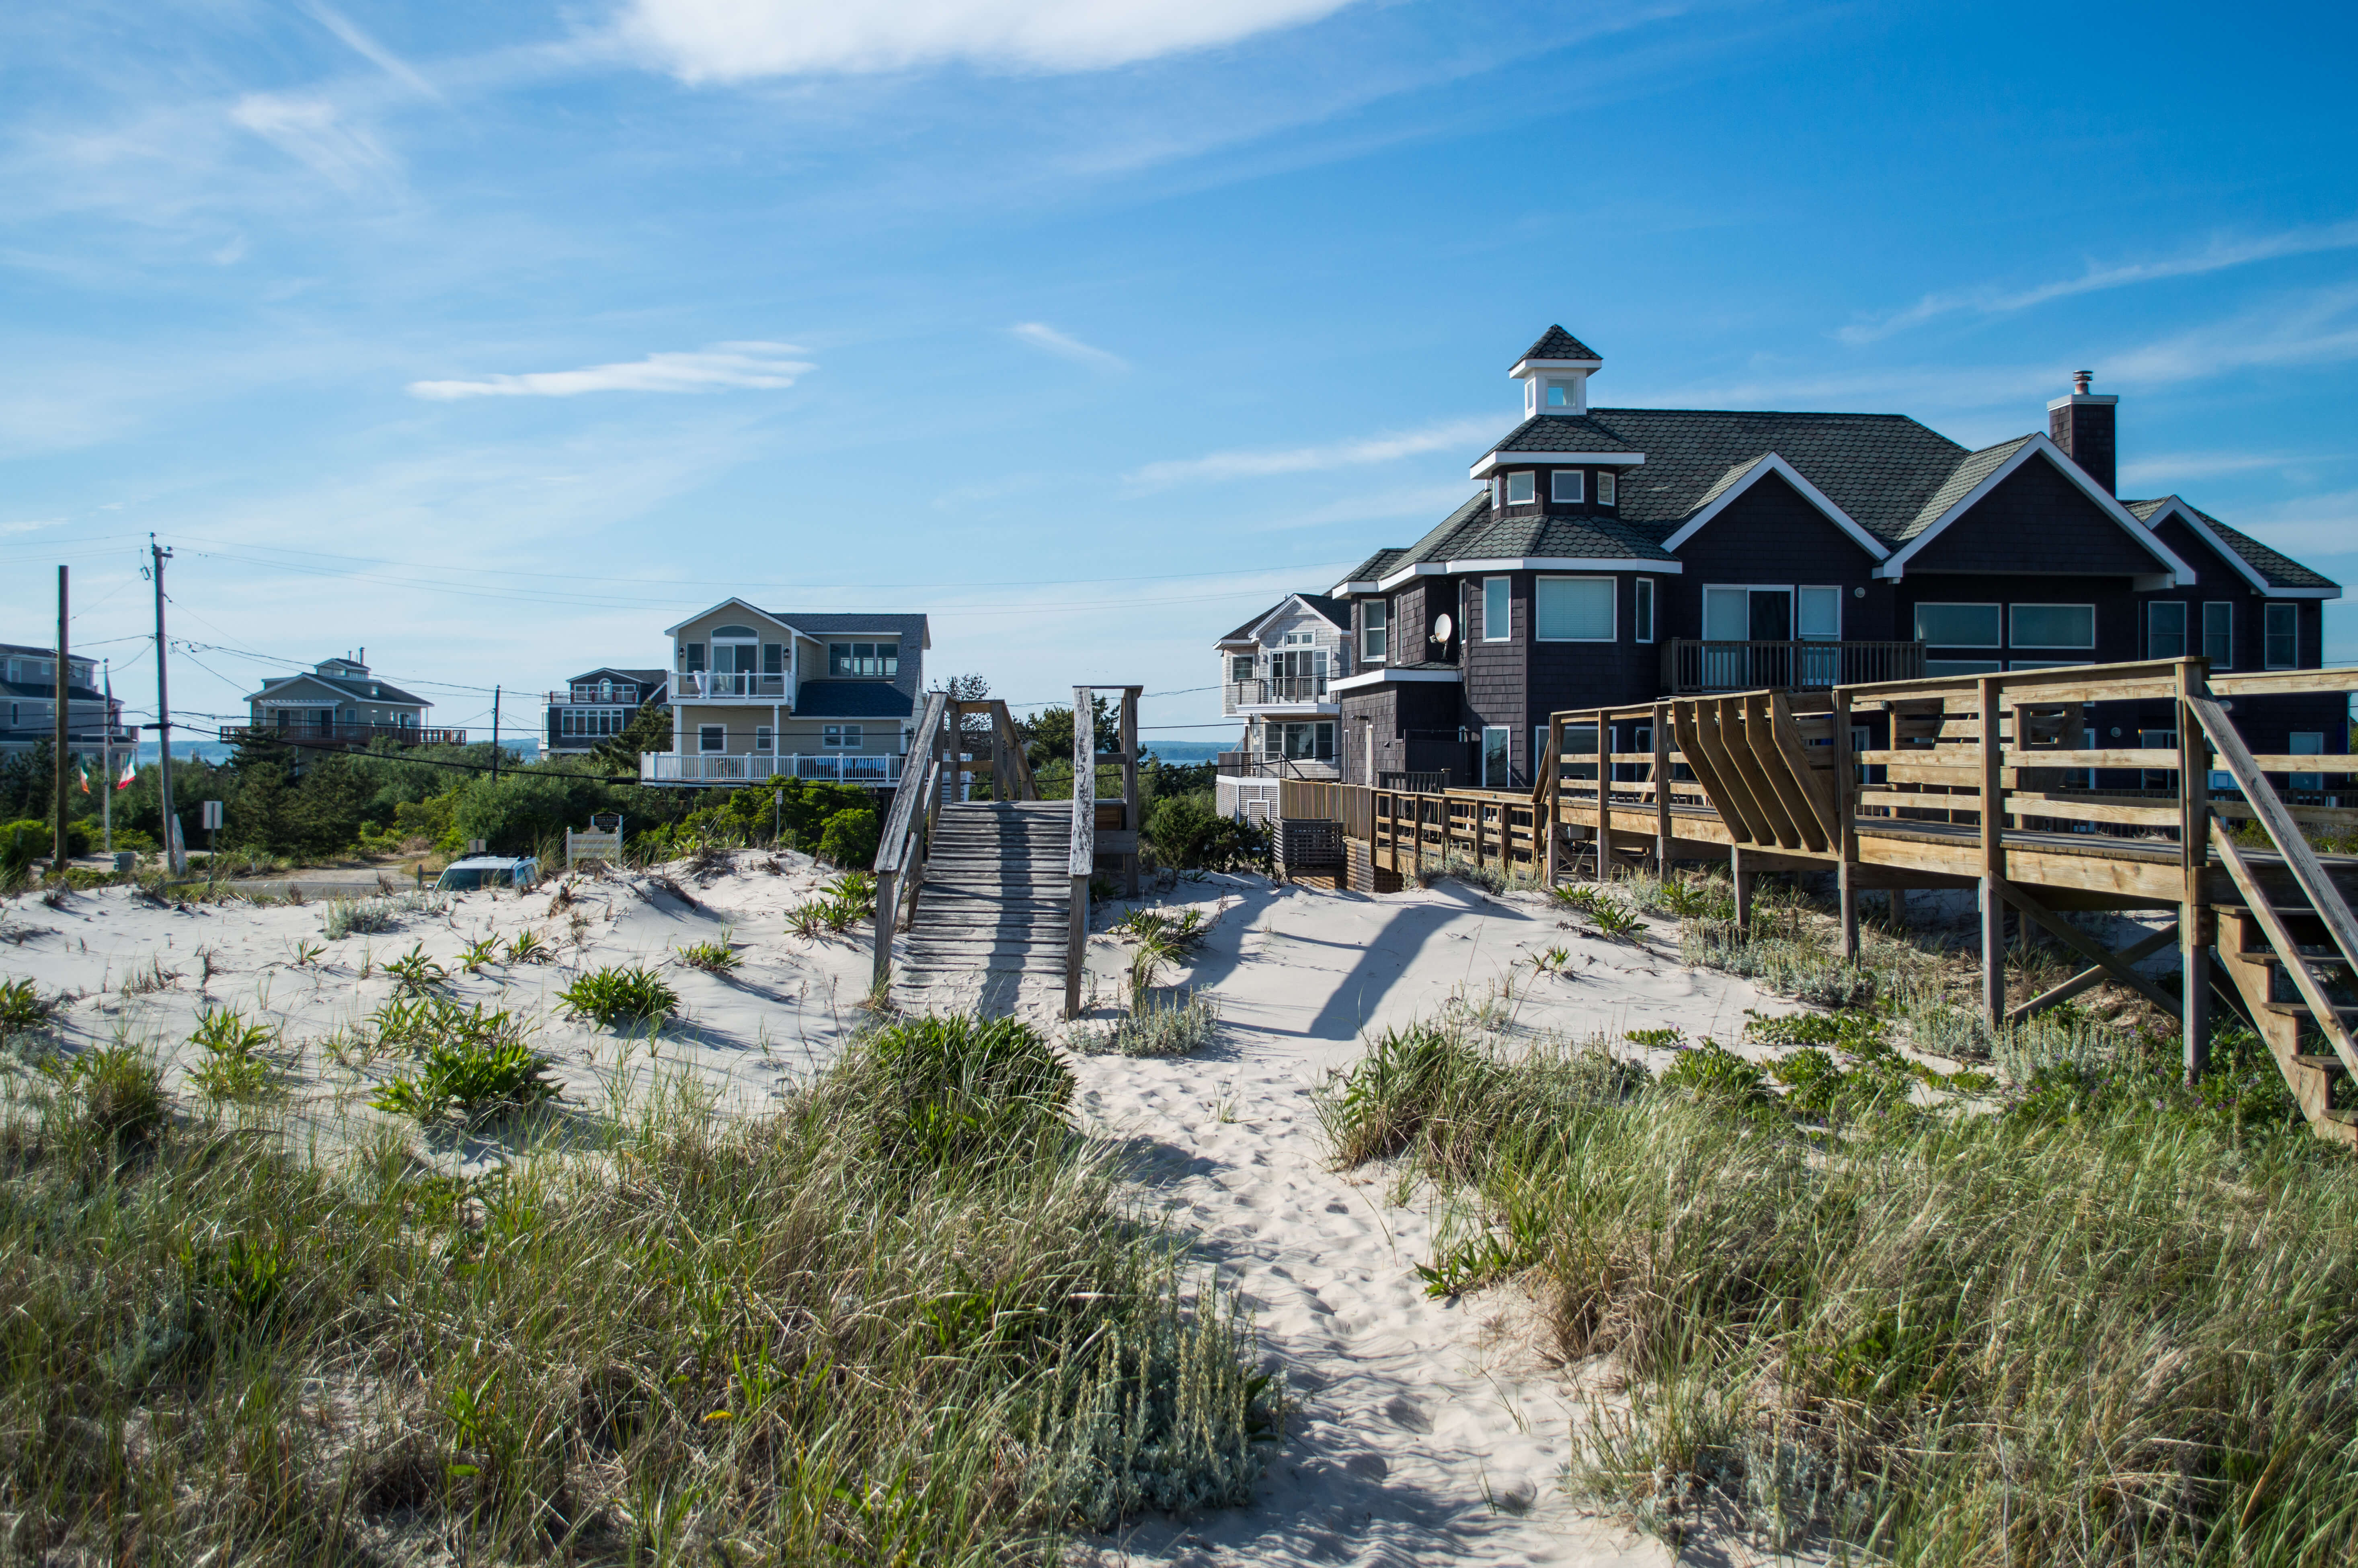 Beach Houses – Summer in the Hamptons, New York City, USA